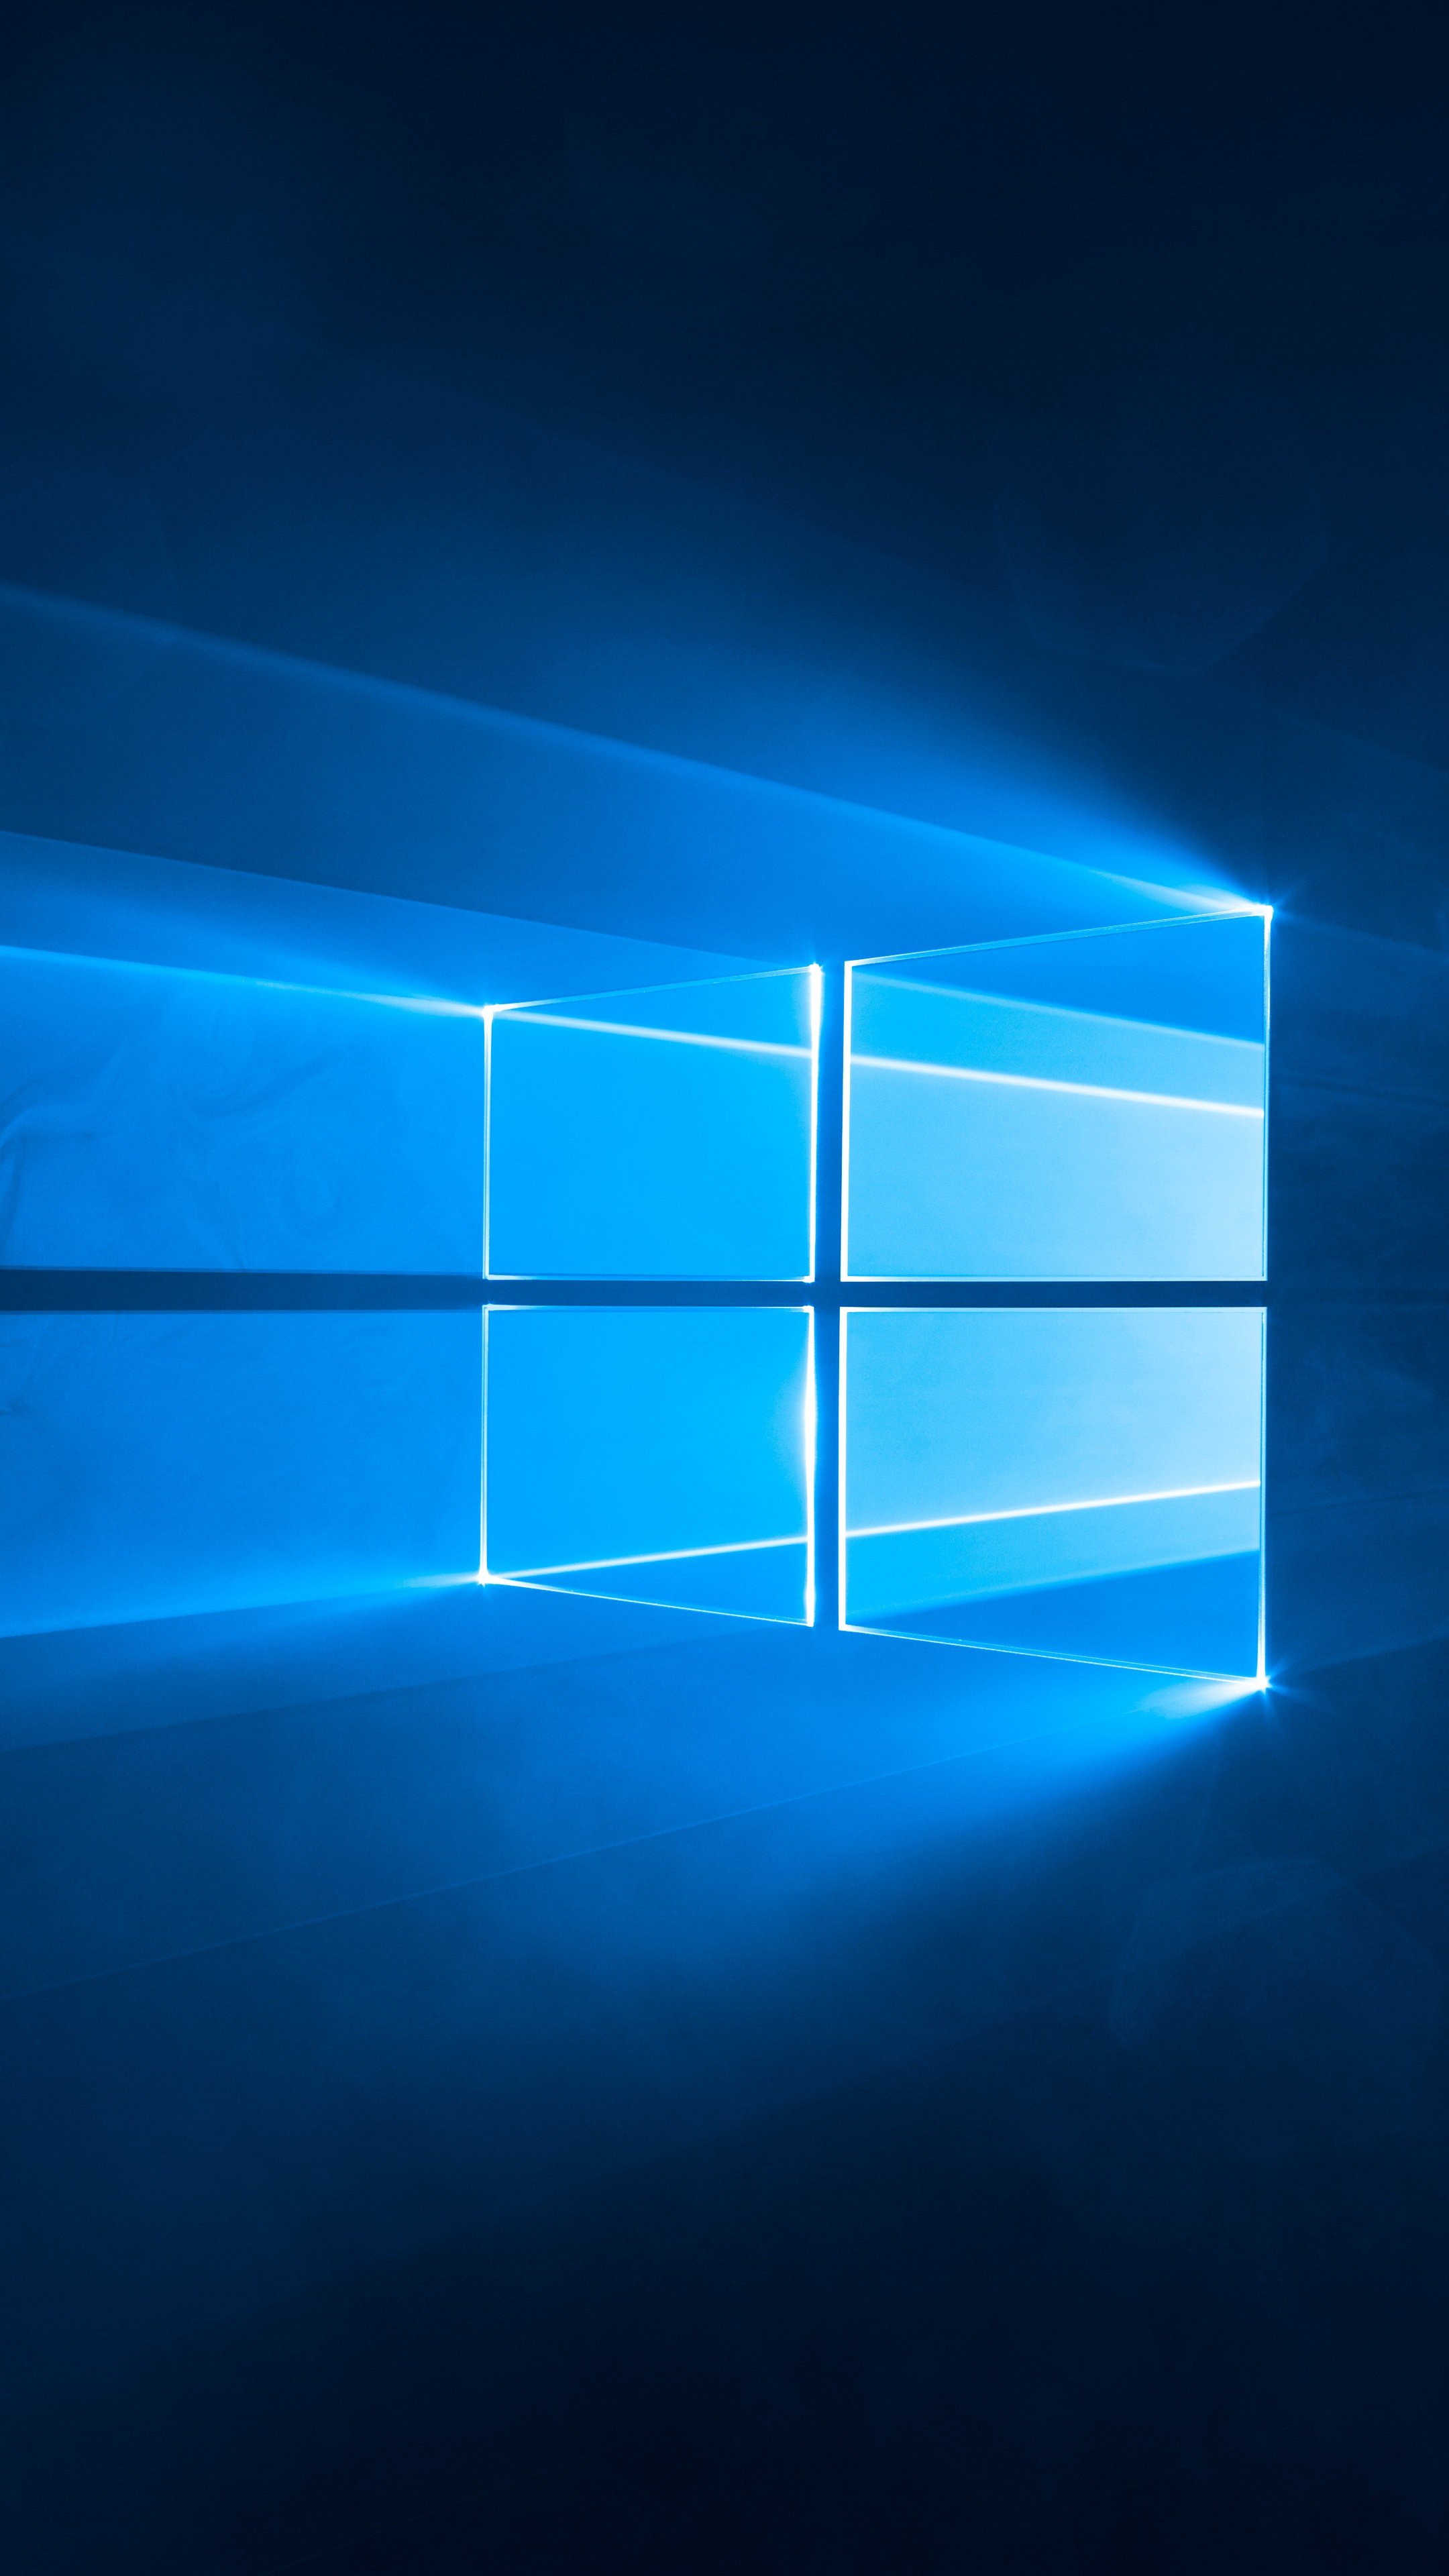 Windows 10, Operating systems, Microsoft Windows, Portrait display